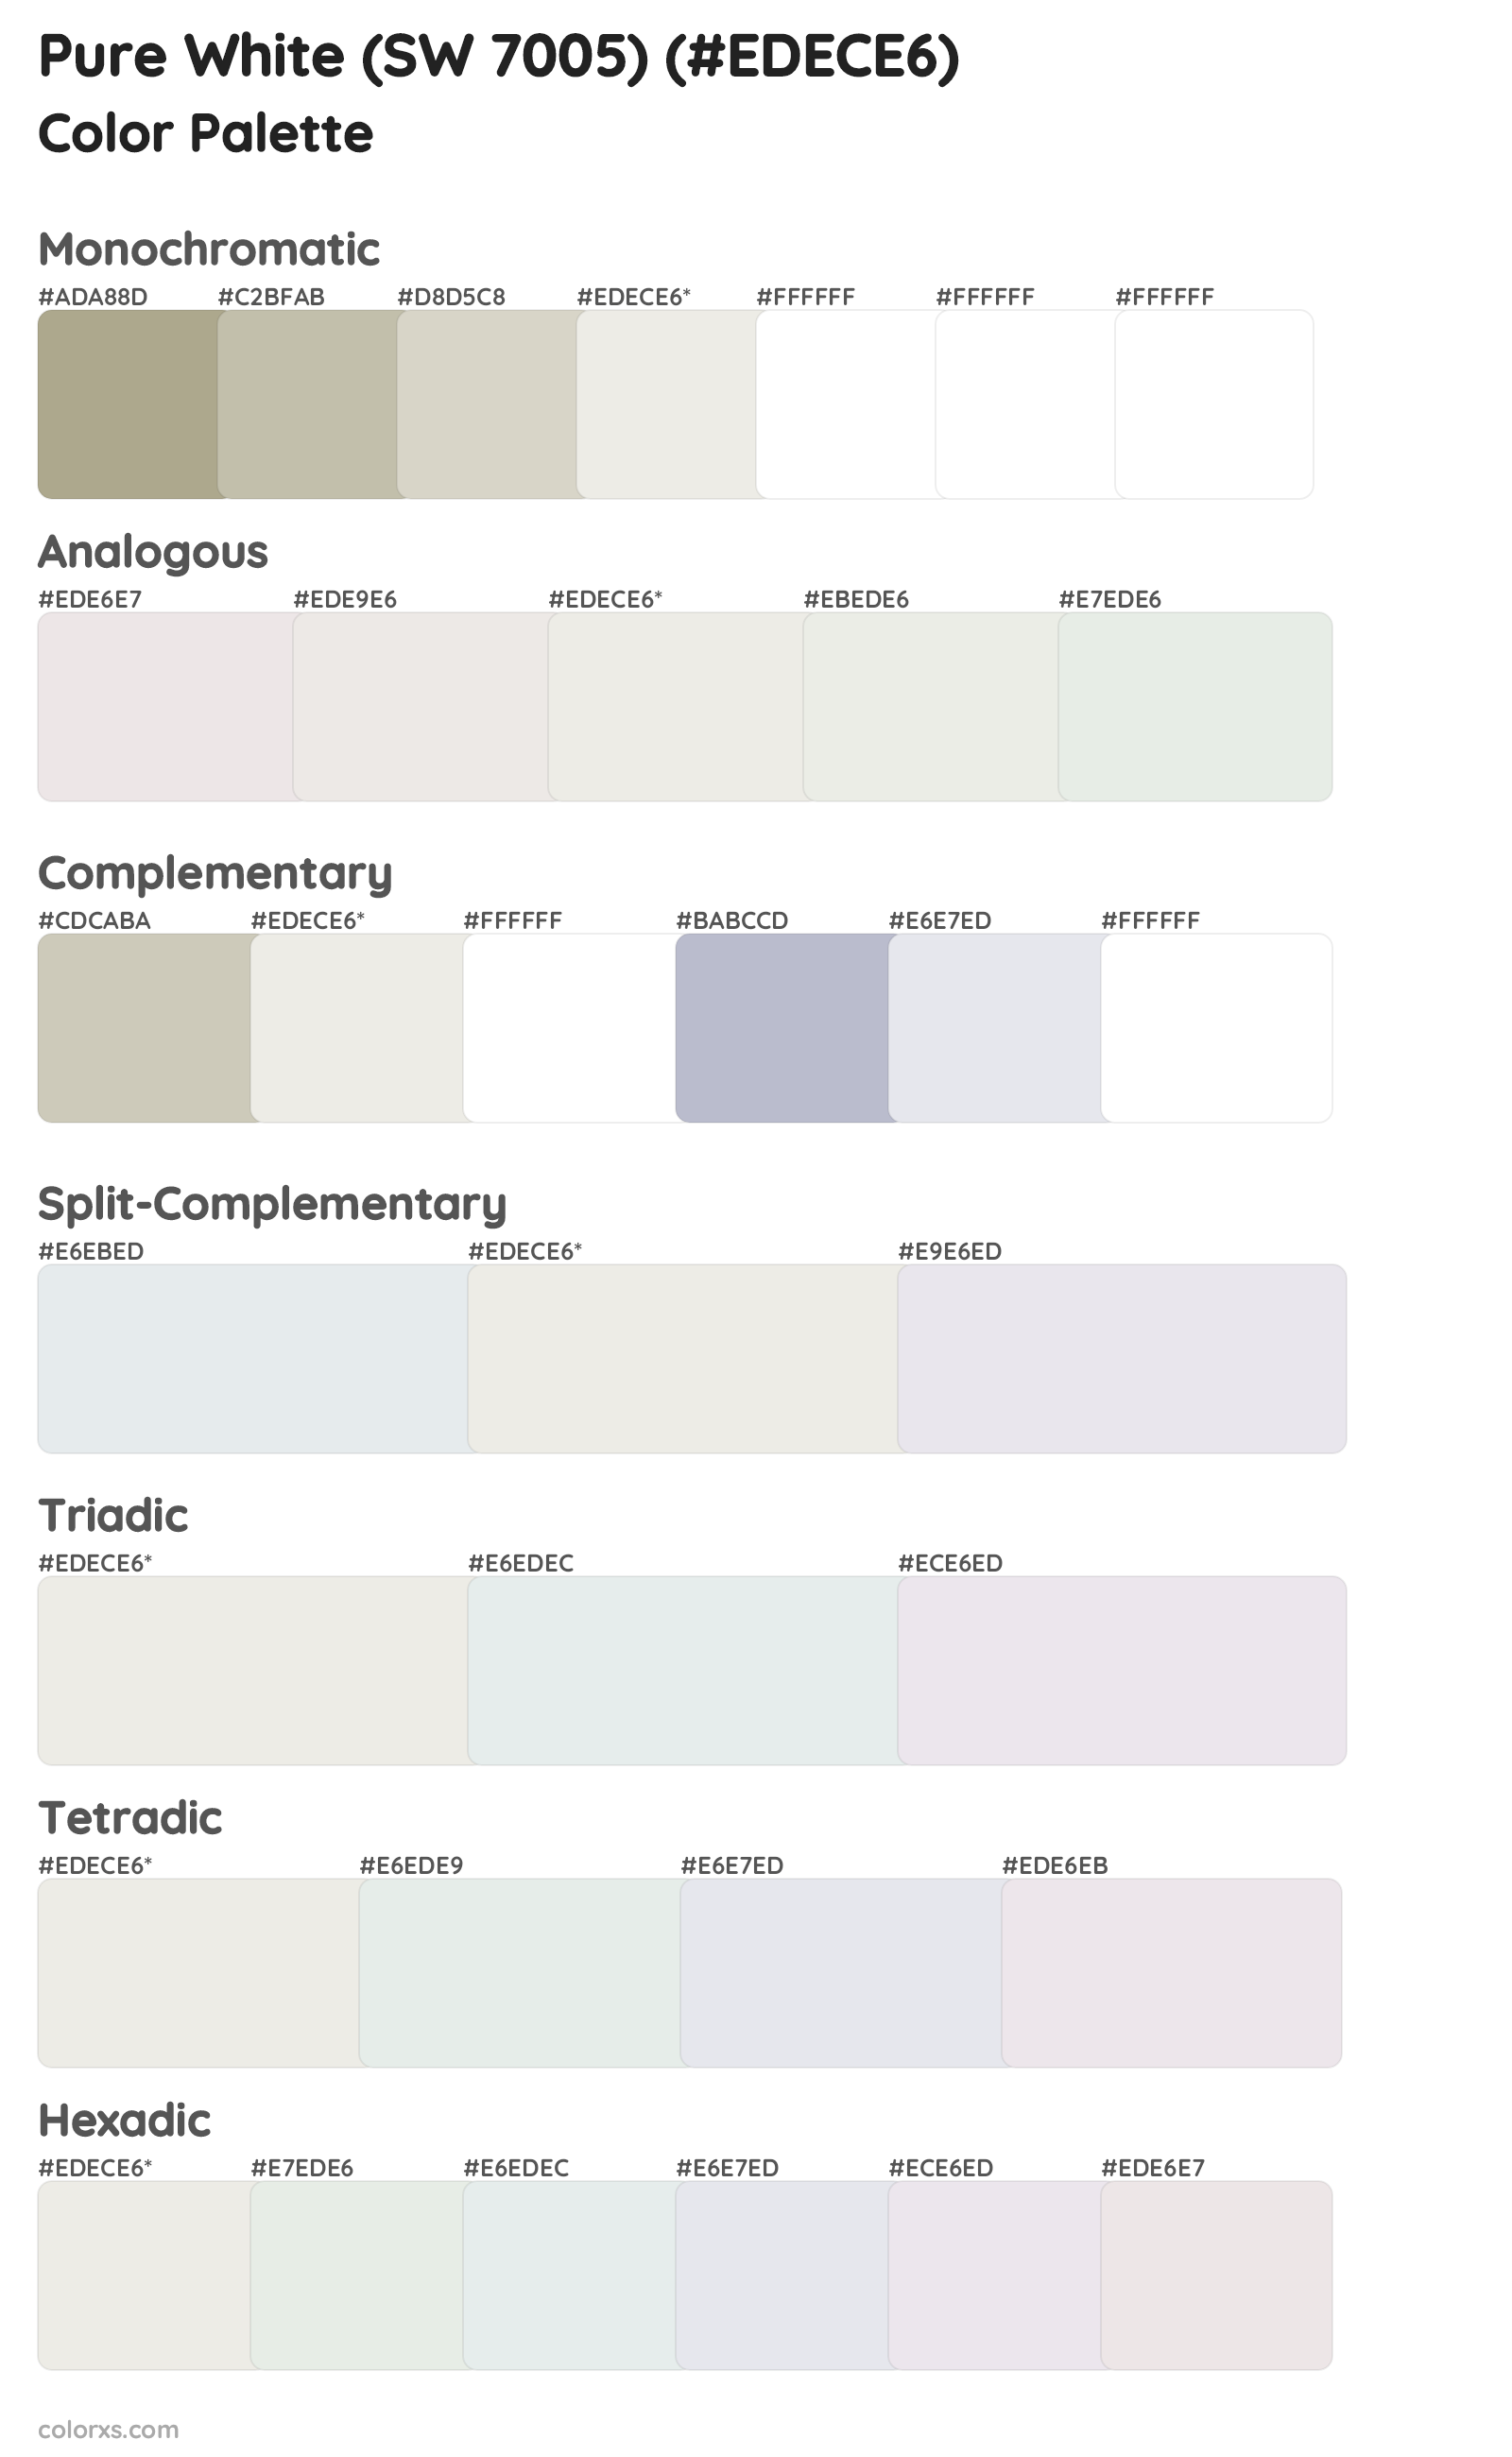 Pure White (SW 7005) Color Scheme Palettes